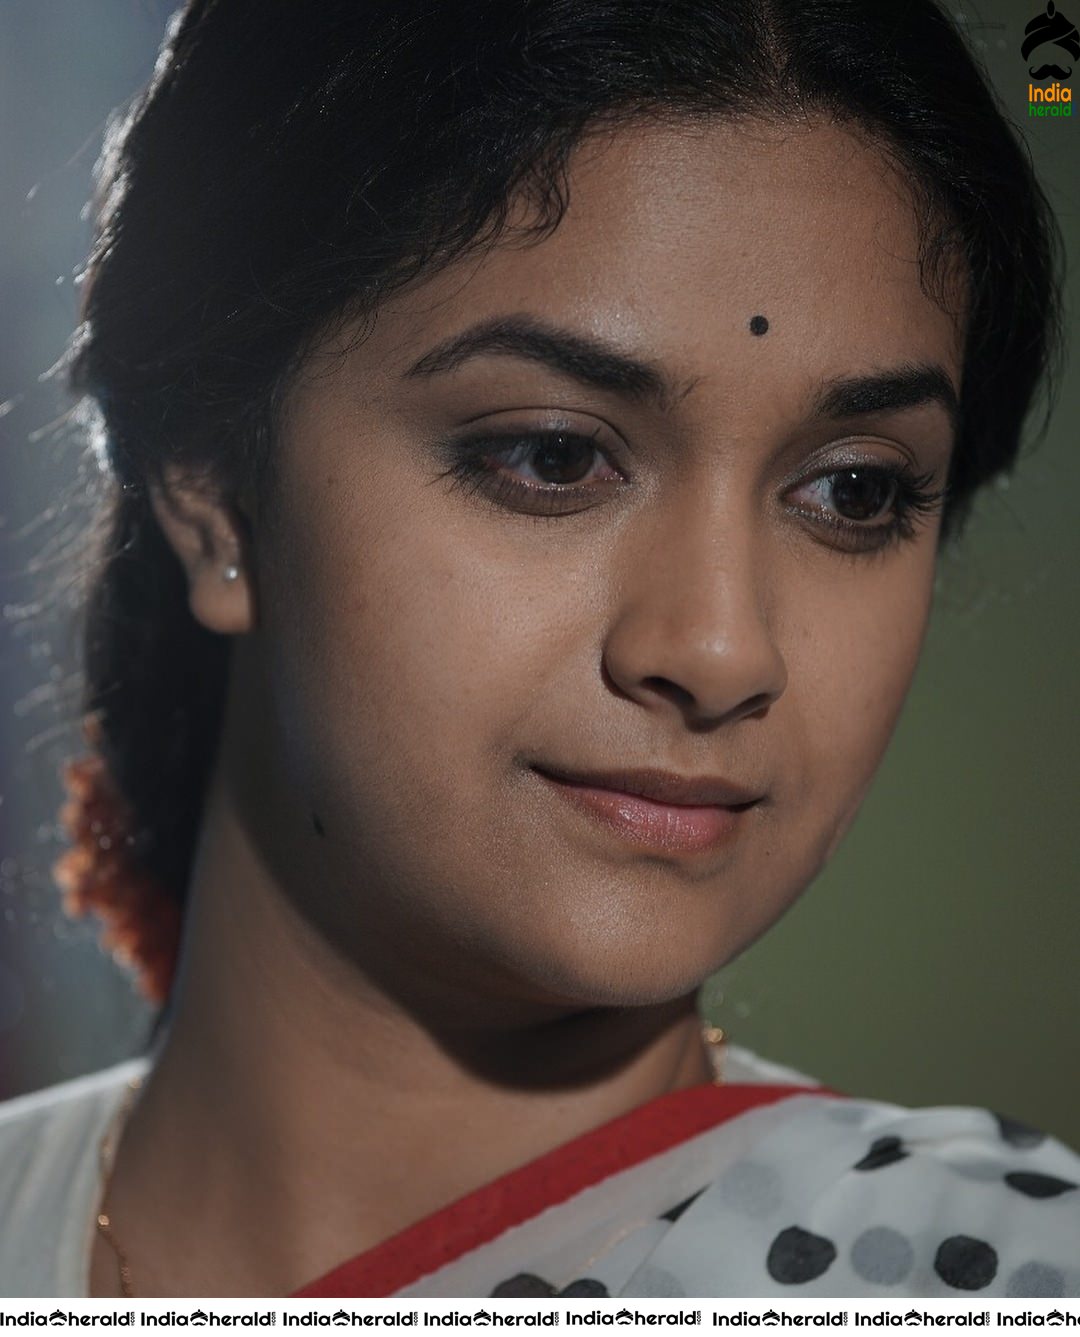 Keerthy Suresh Unseen Photos as legendary actress Savithri from the movie Mahanathi Set 3